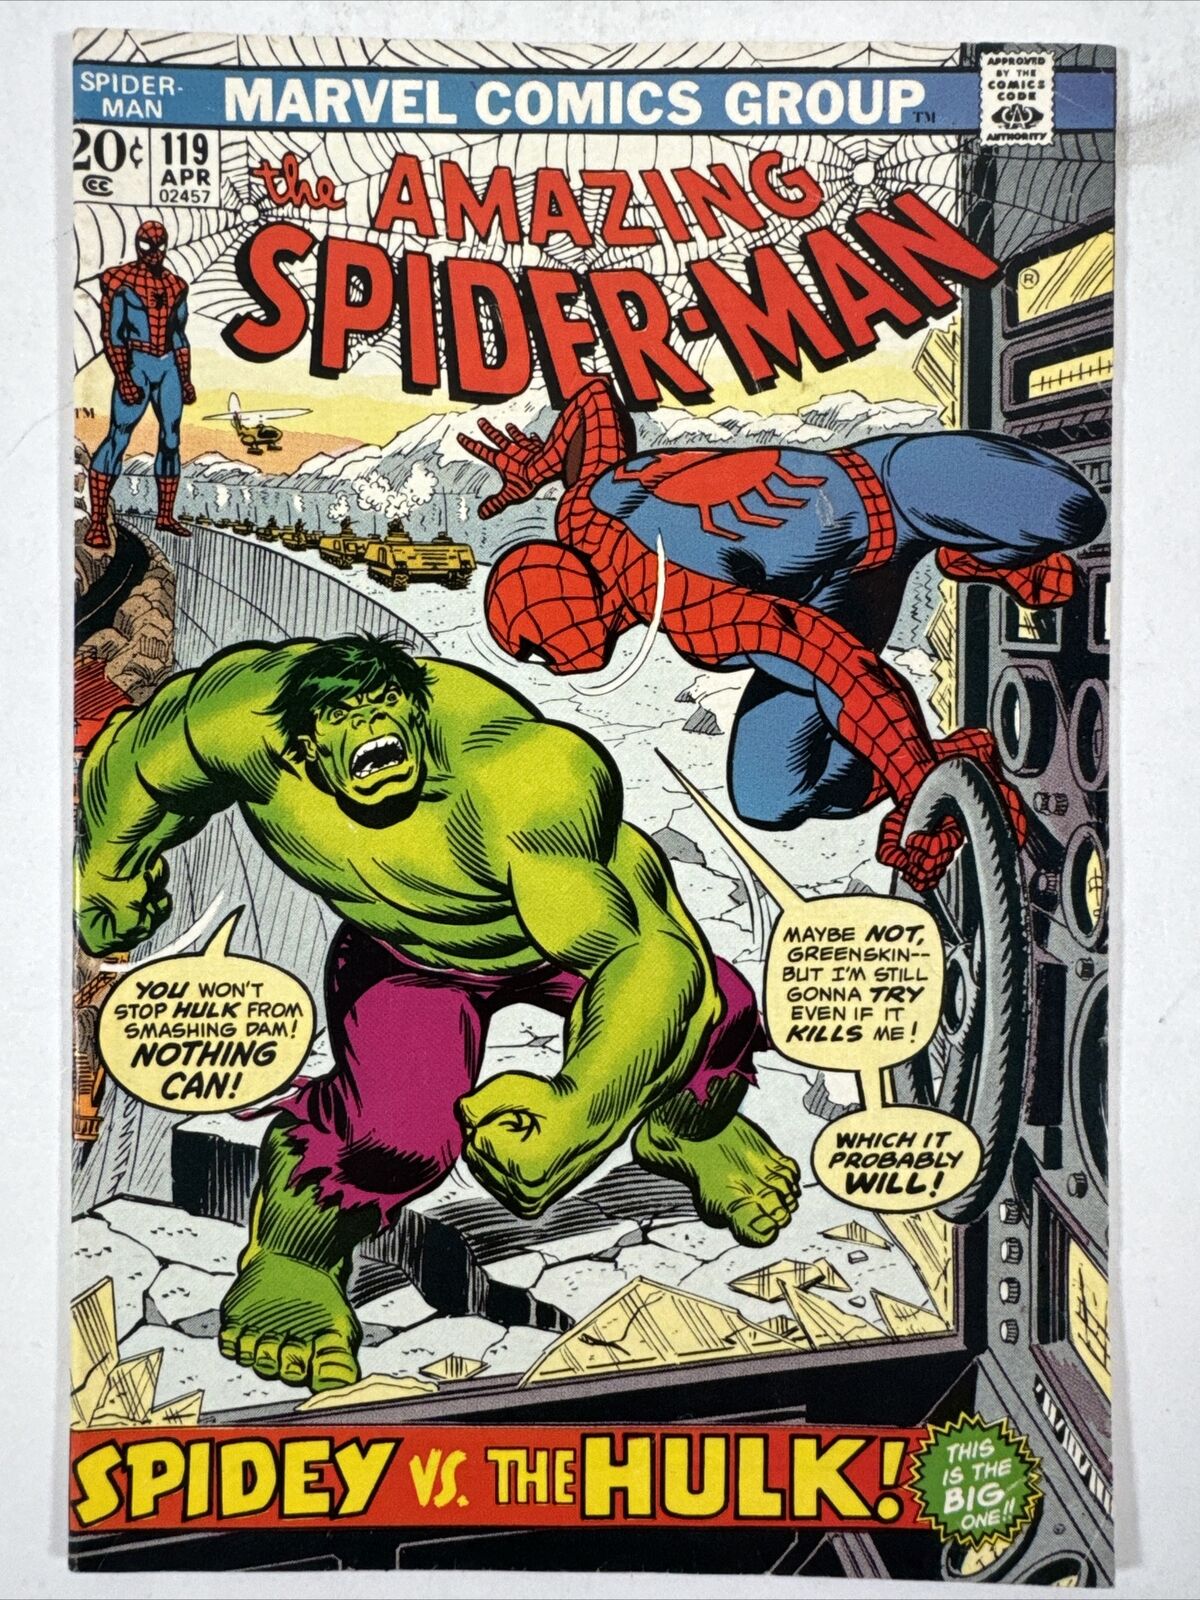 The Amazing Spider-man #119 (Marvel Comics 1973) Spidey vs. the Hulk